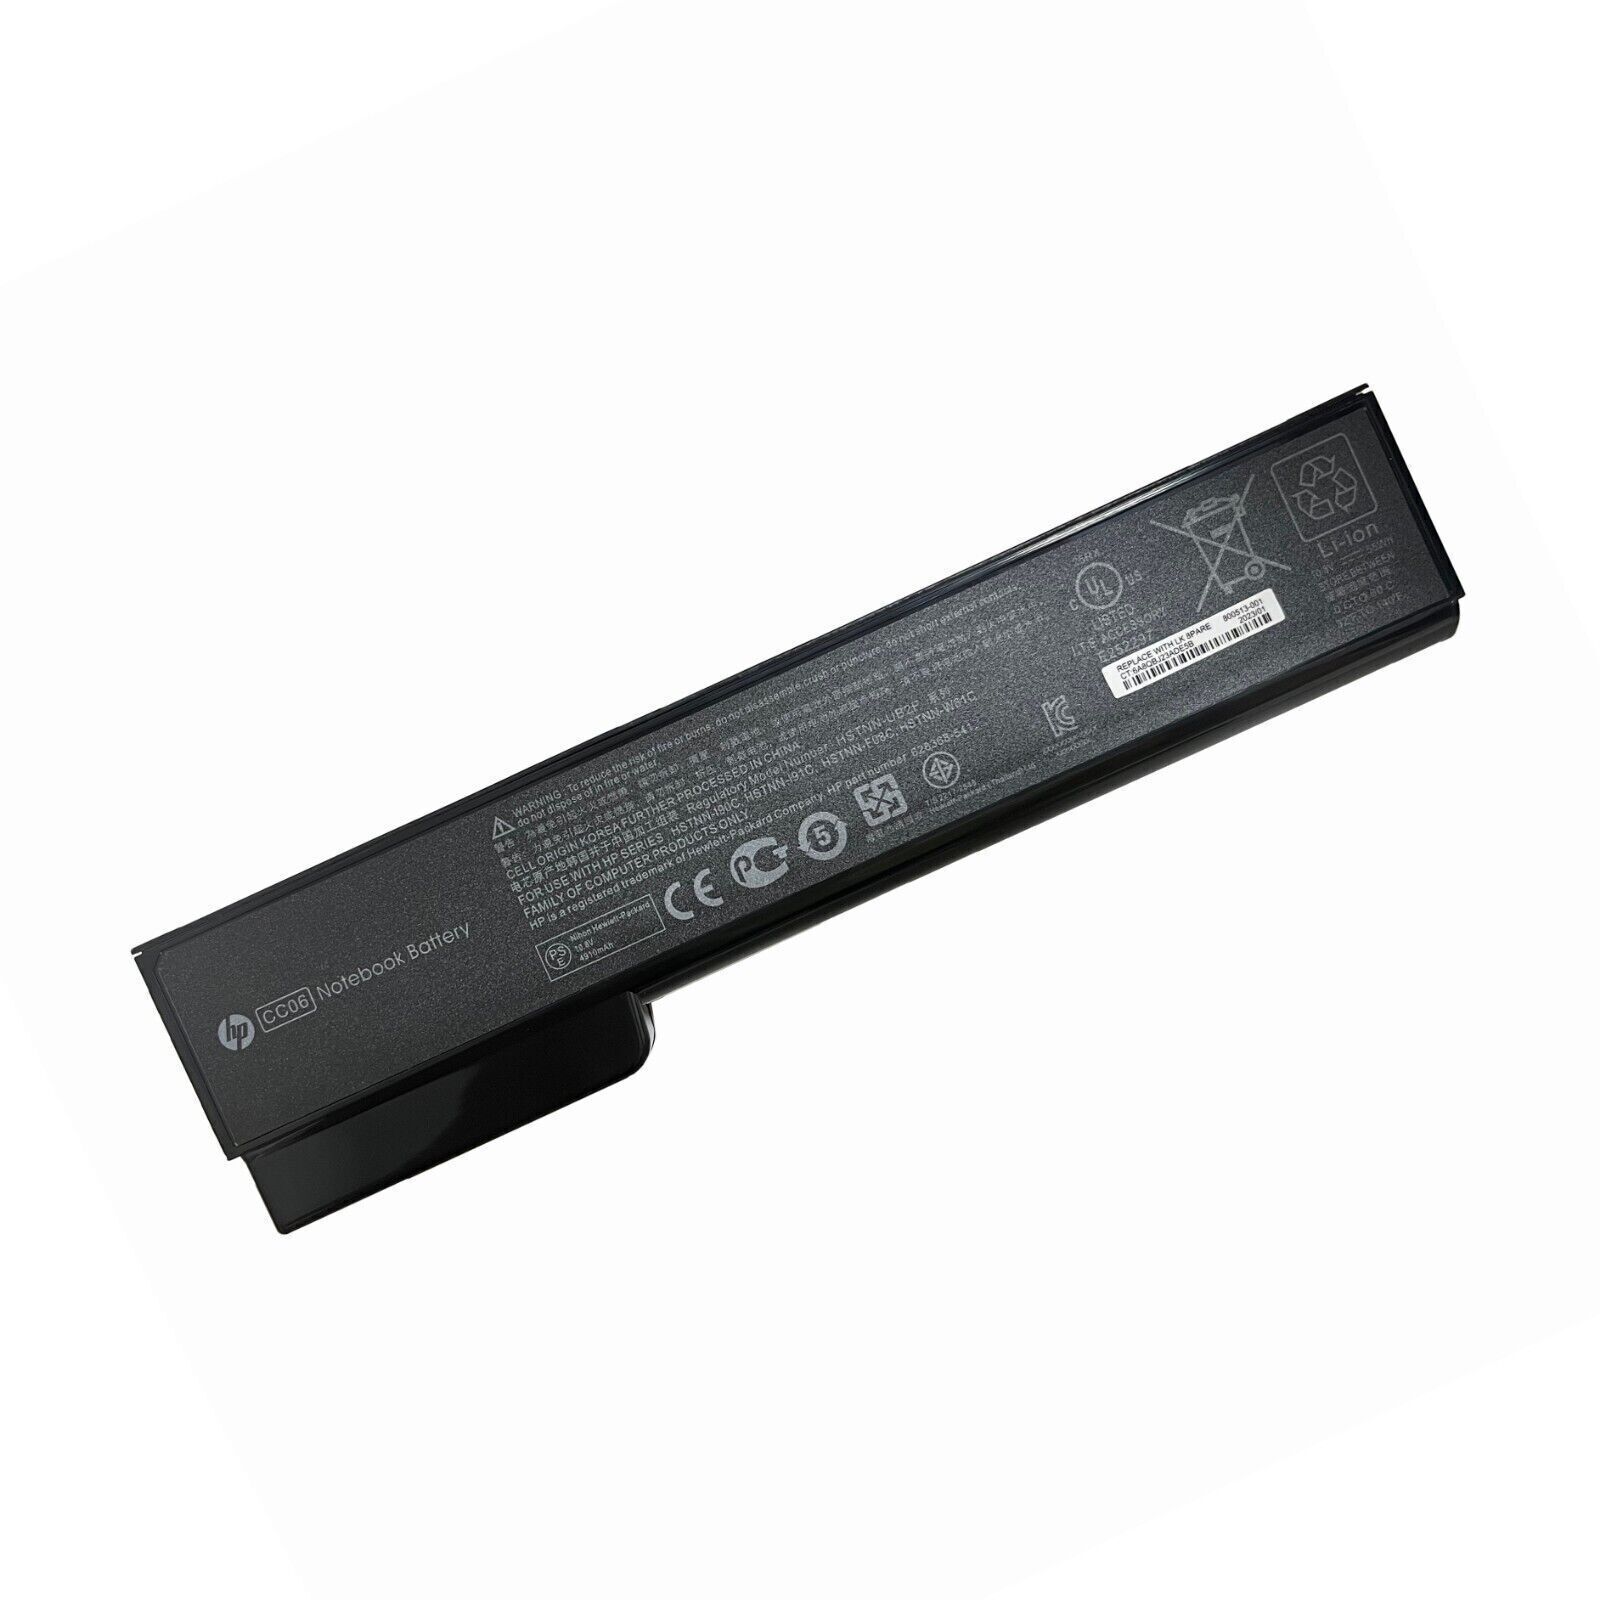 NEW OEM CC06 Battery For HP EliteBook 8460W 8460P 8560P ProBook 6560b 6460b 6360